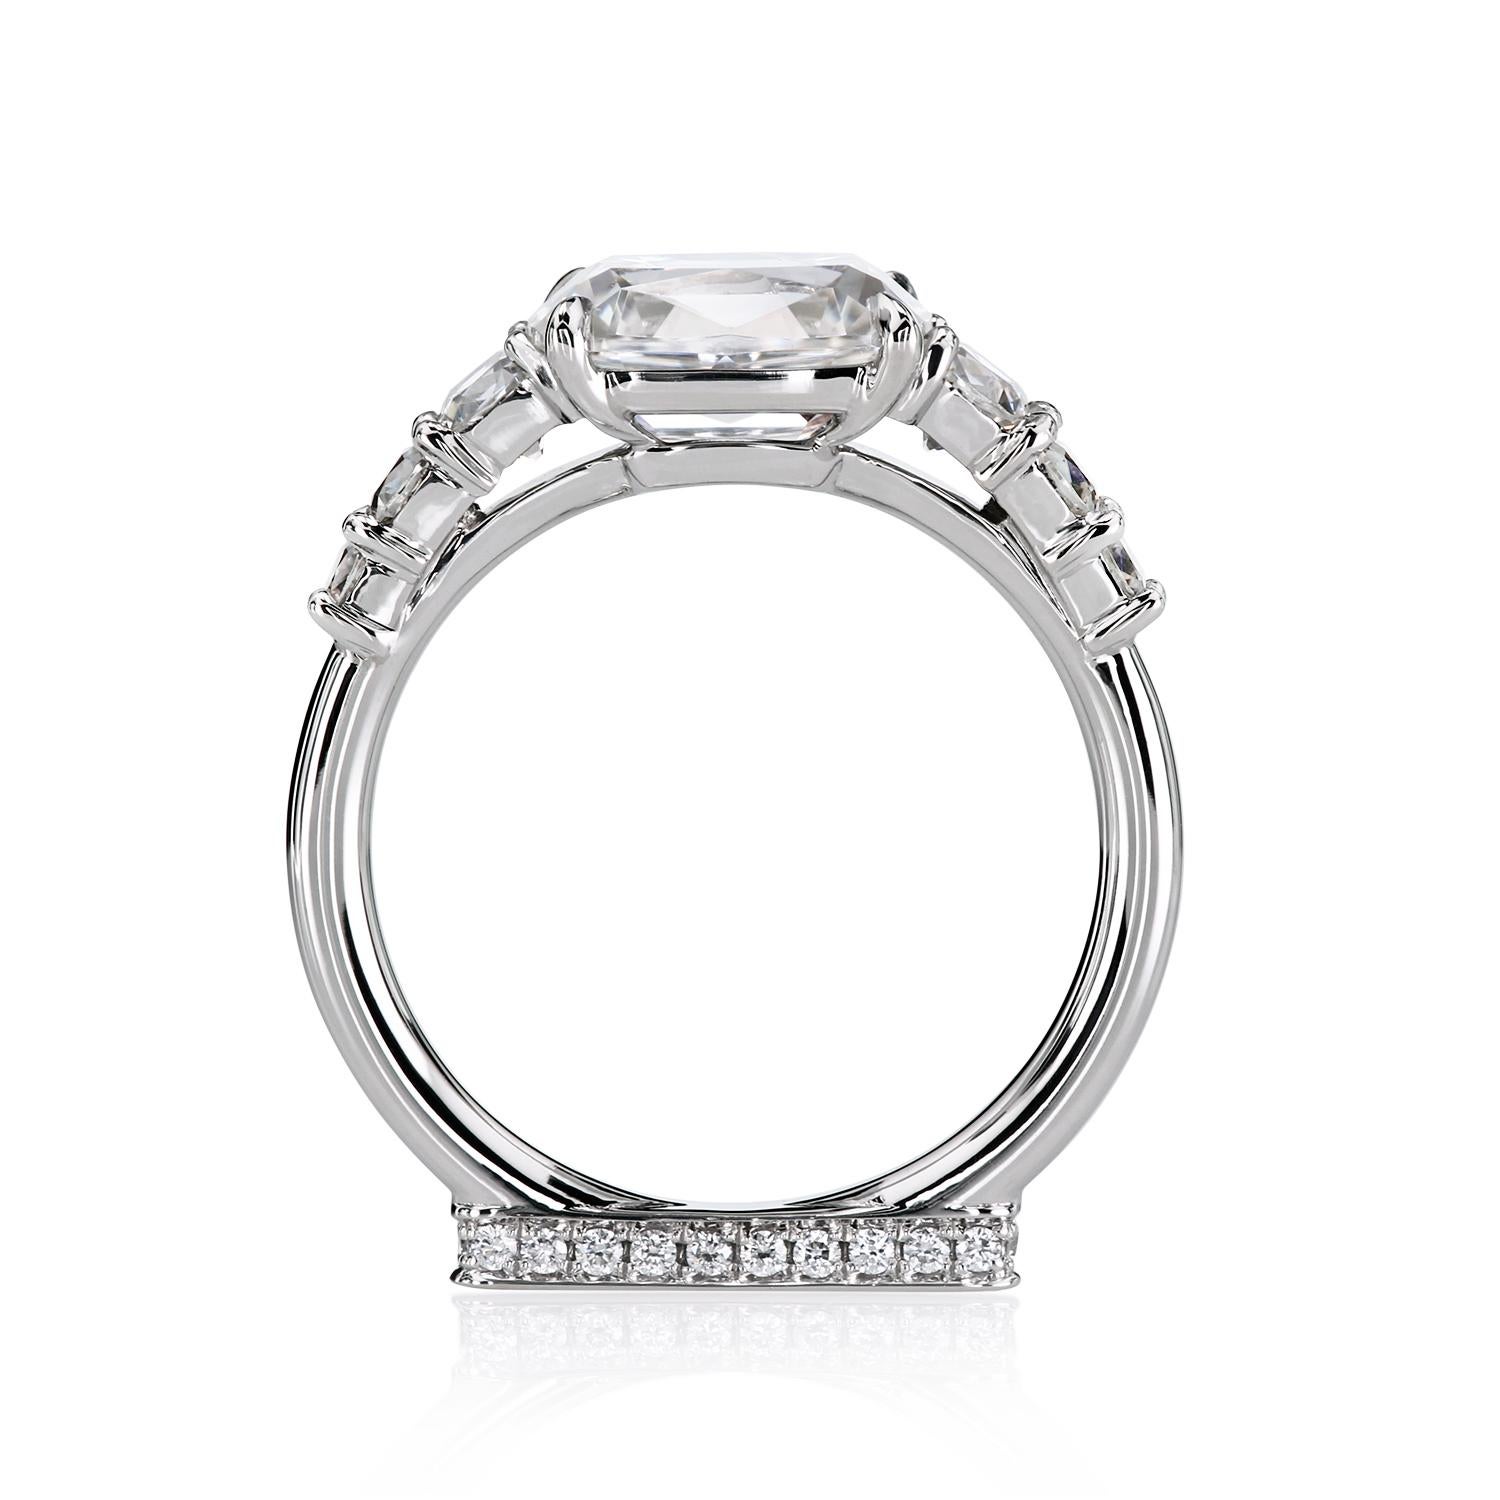 Contemporary Leon Mege East-West Engagement Ring Features Rare True Antique Cushion Diamond For Sale